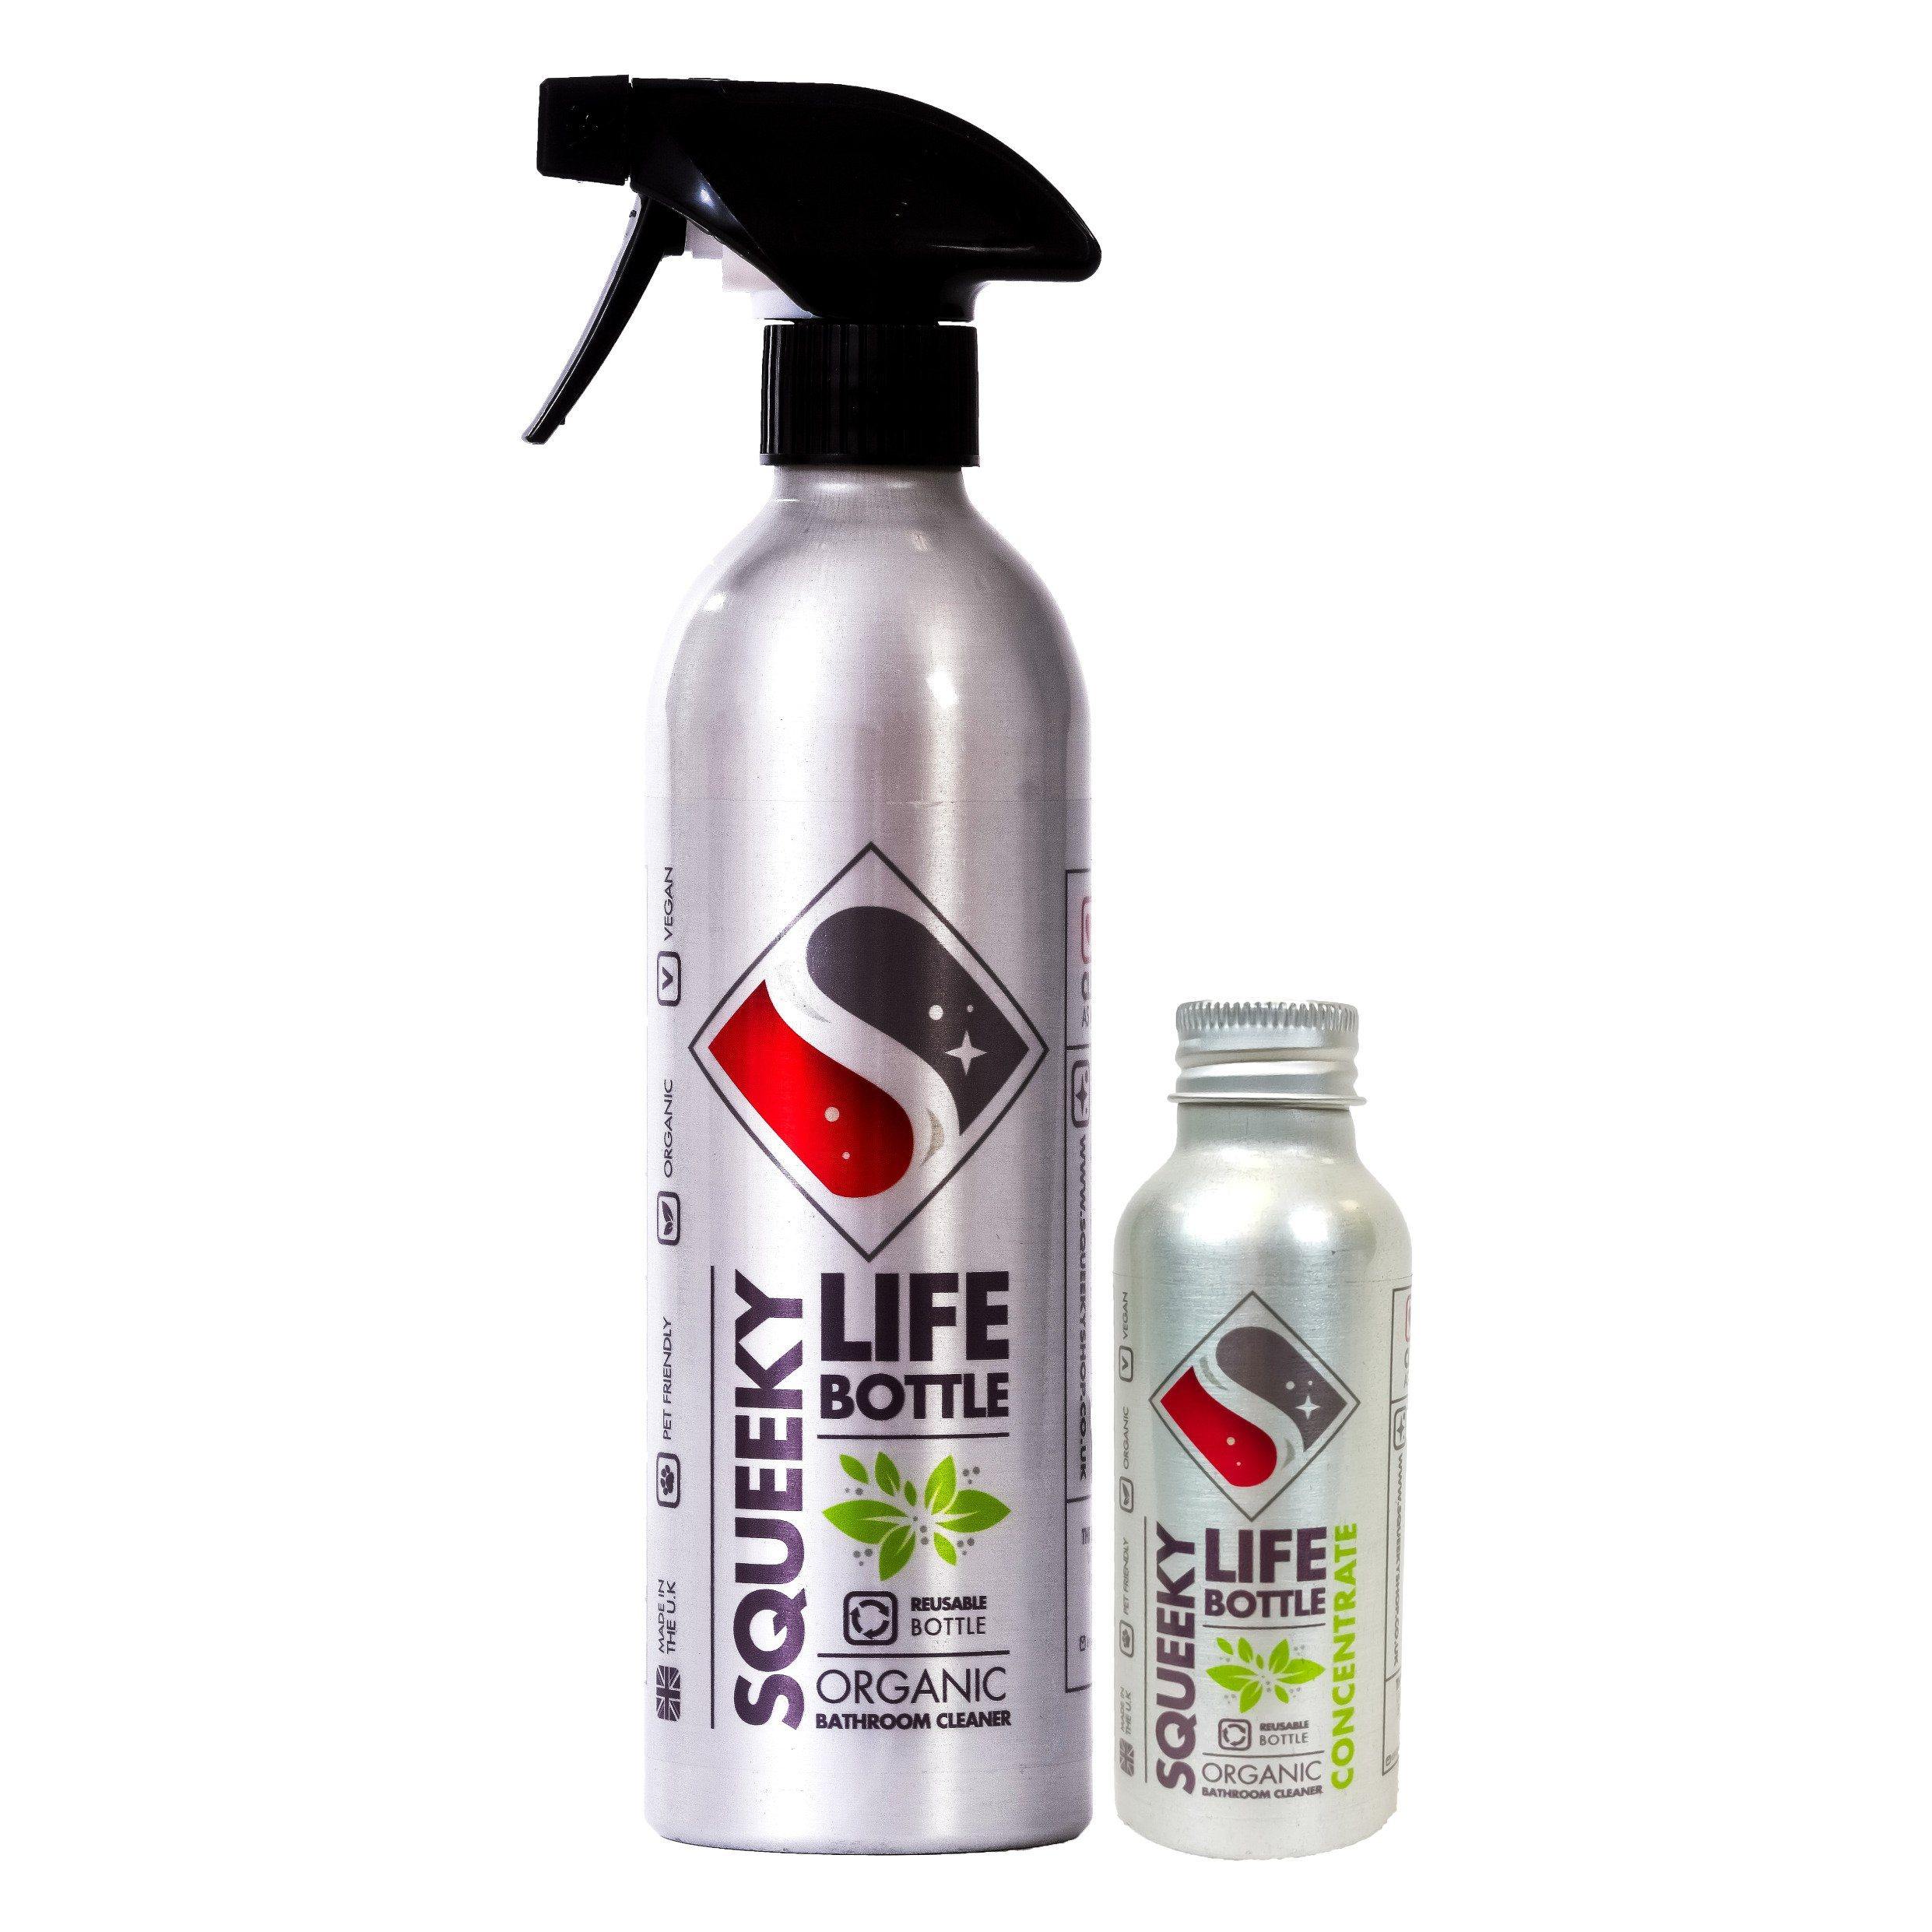 Organic - Bathroom Cleaner Life Bottle Bundle Cleaning Products Foxyavenue UK